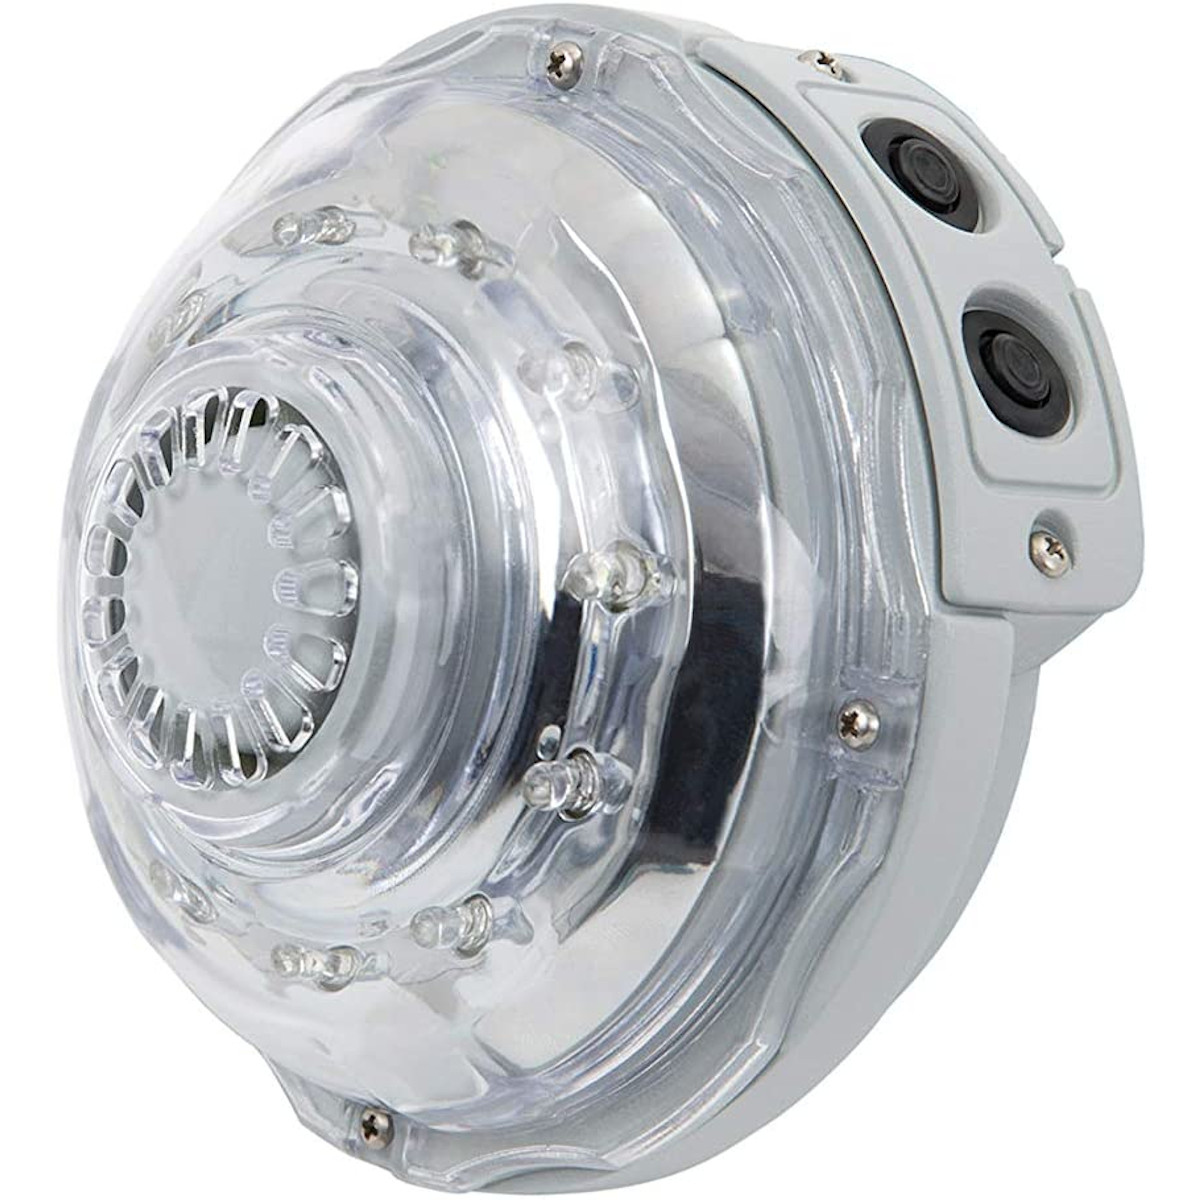 K Intex LED-Licht Whirlpool Mehrfarbig 28503 Leuchte Pure Spa Beleuchtung Pool, 